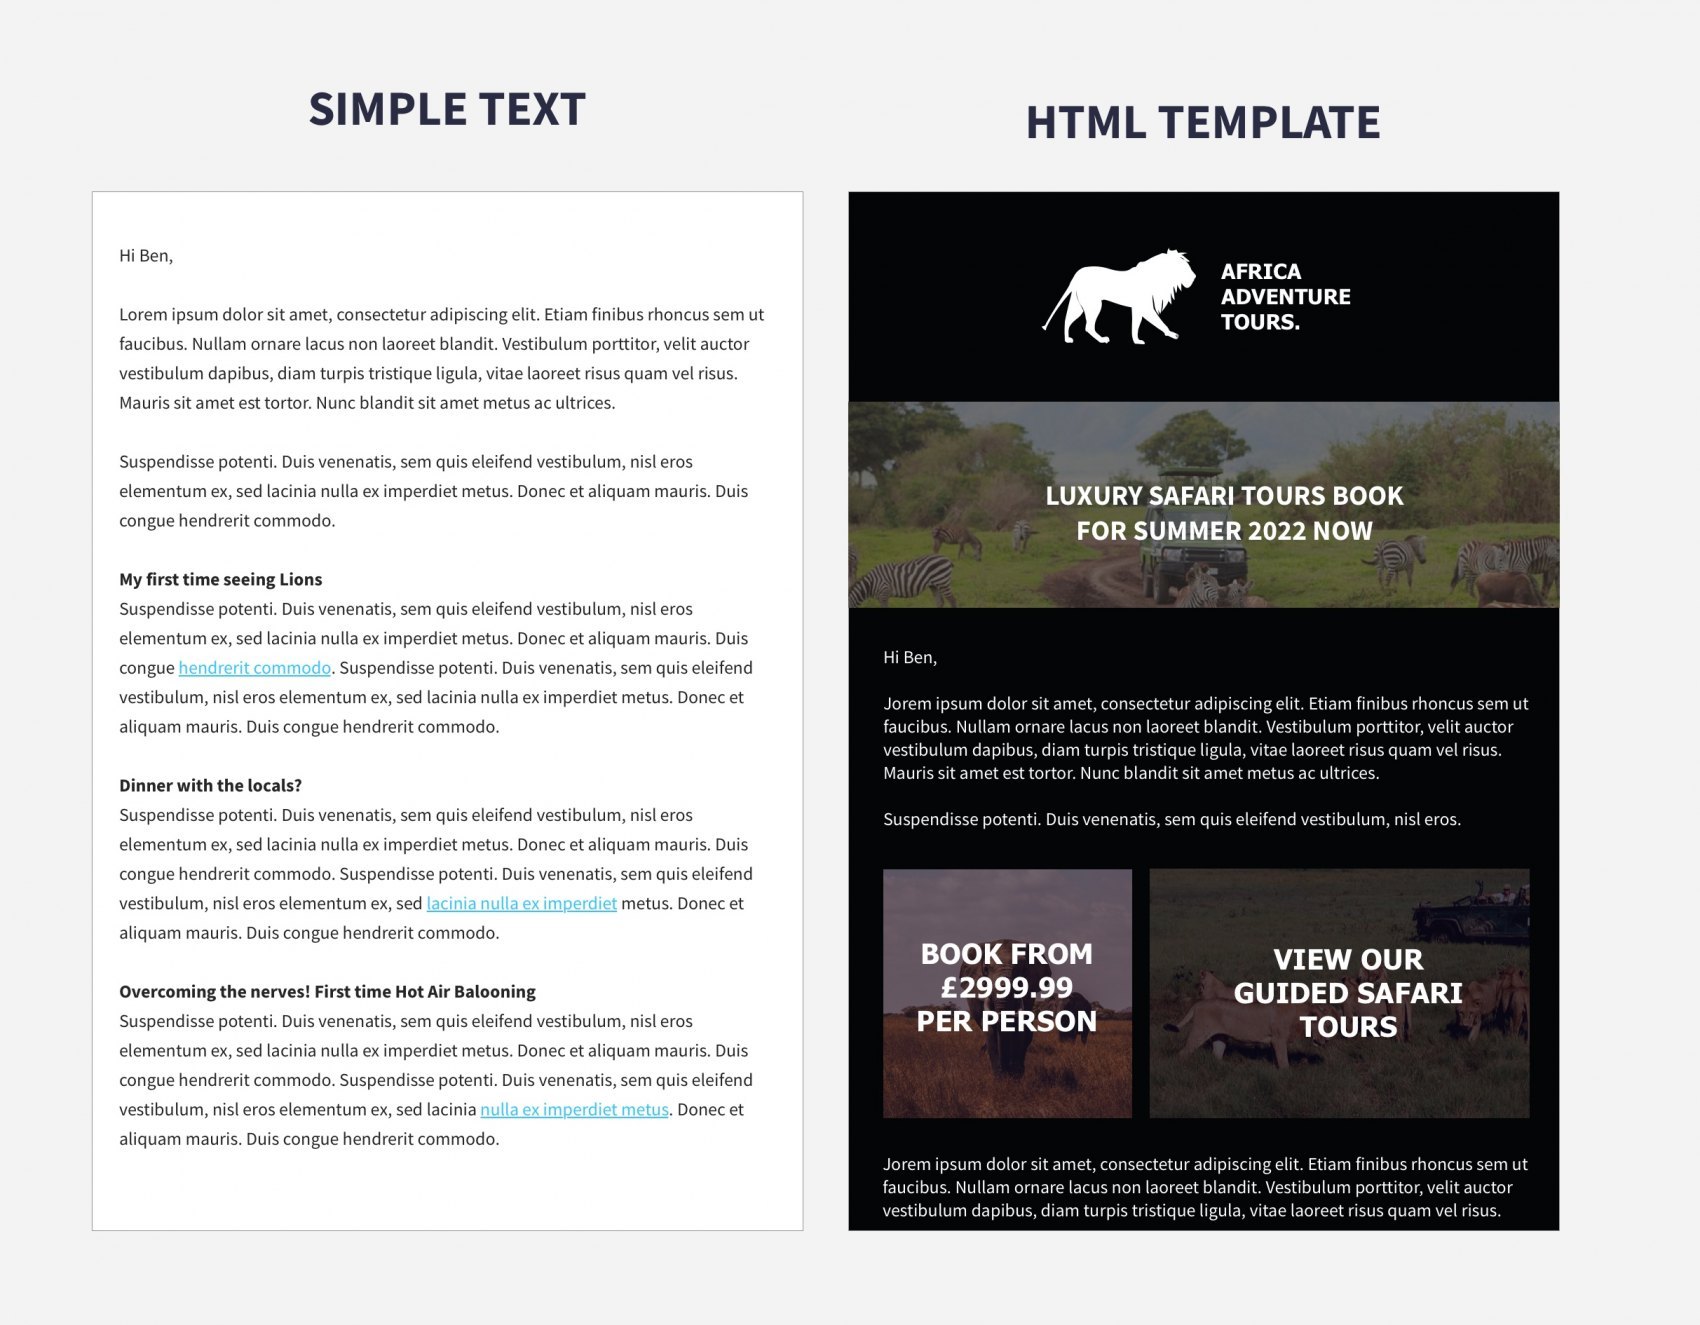 Simple Text Versus HTML Email Comparison